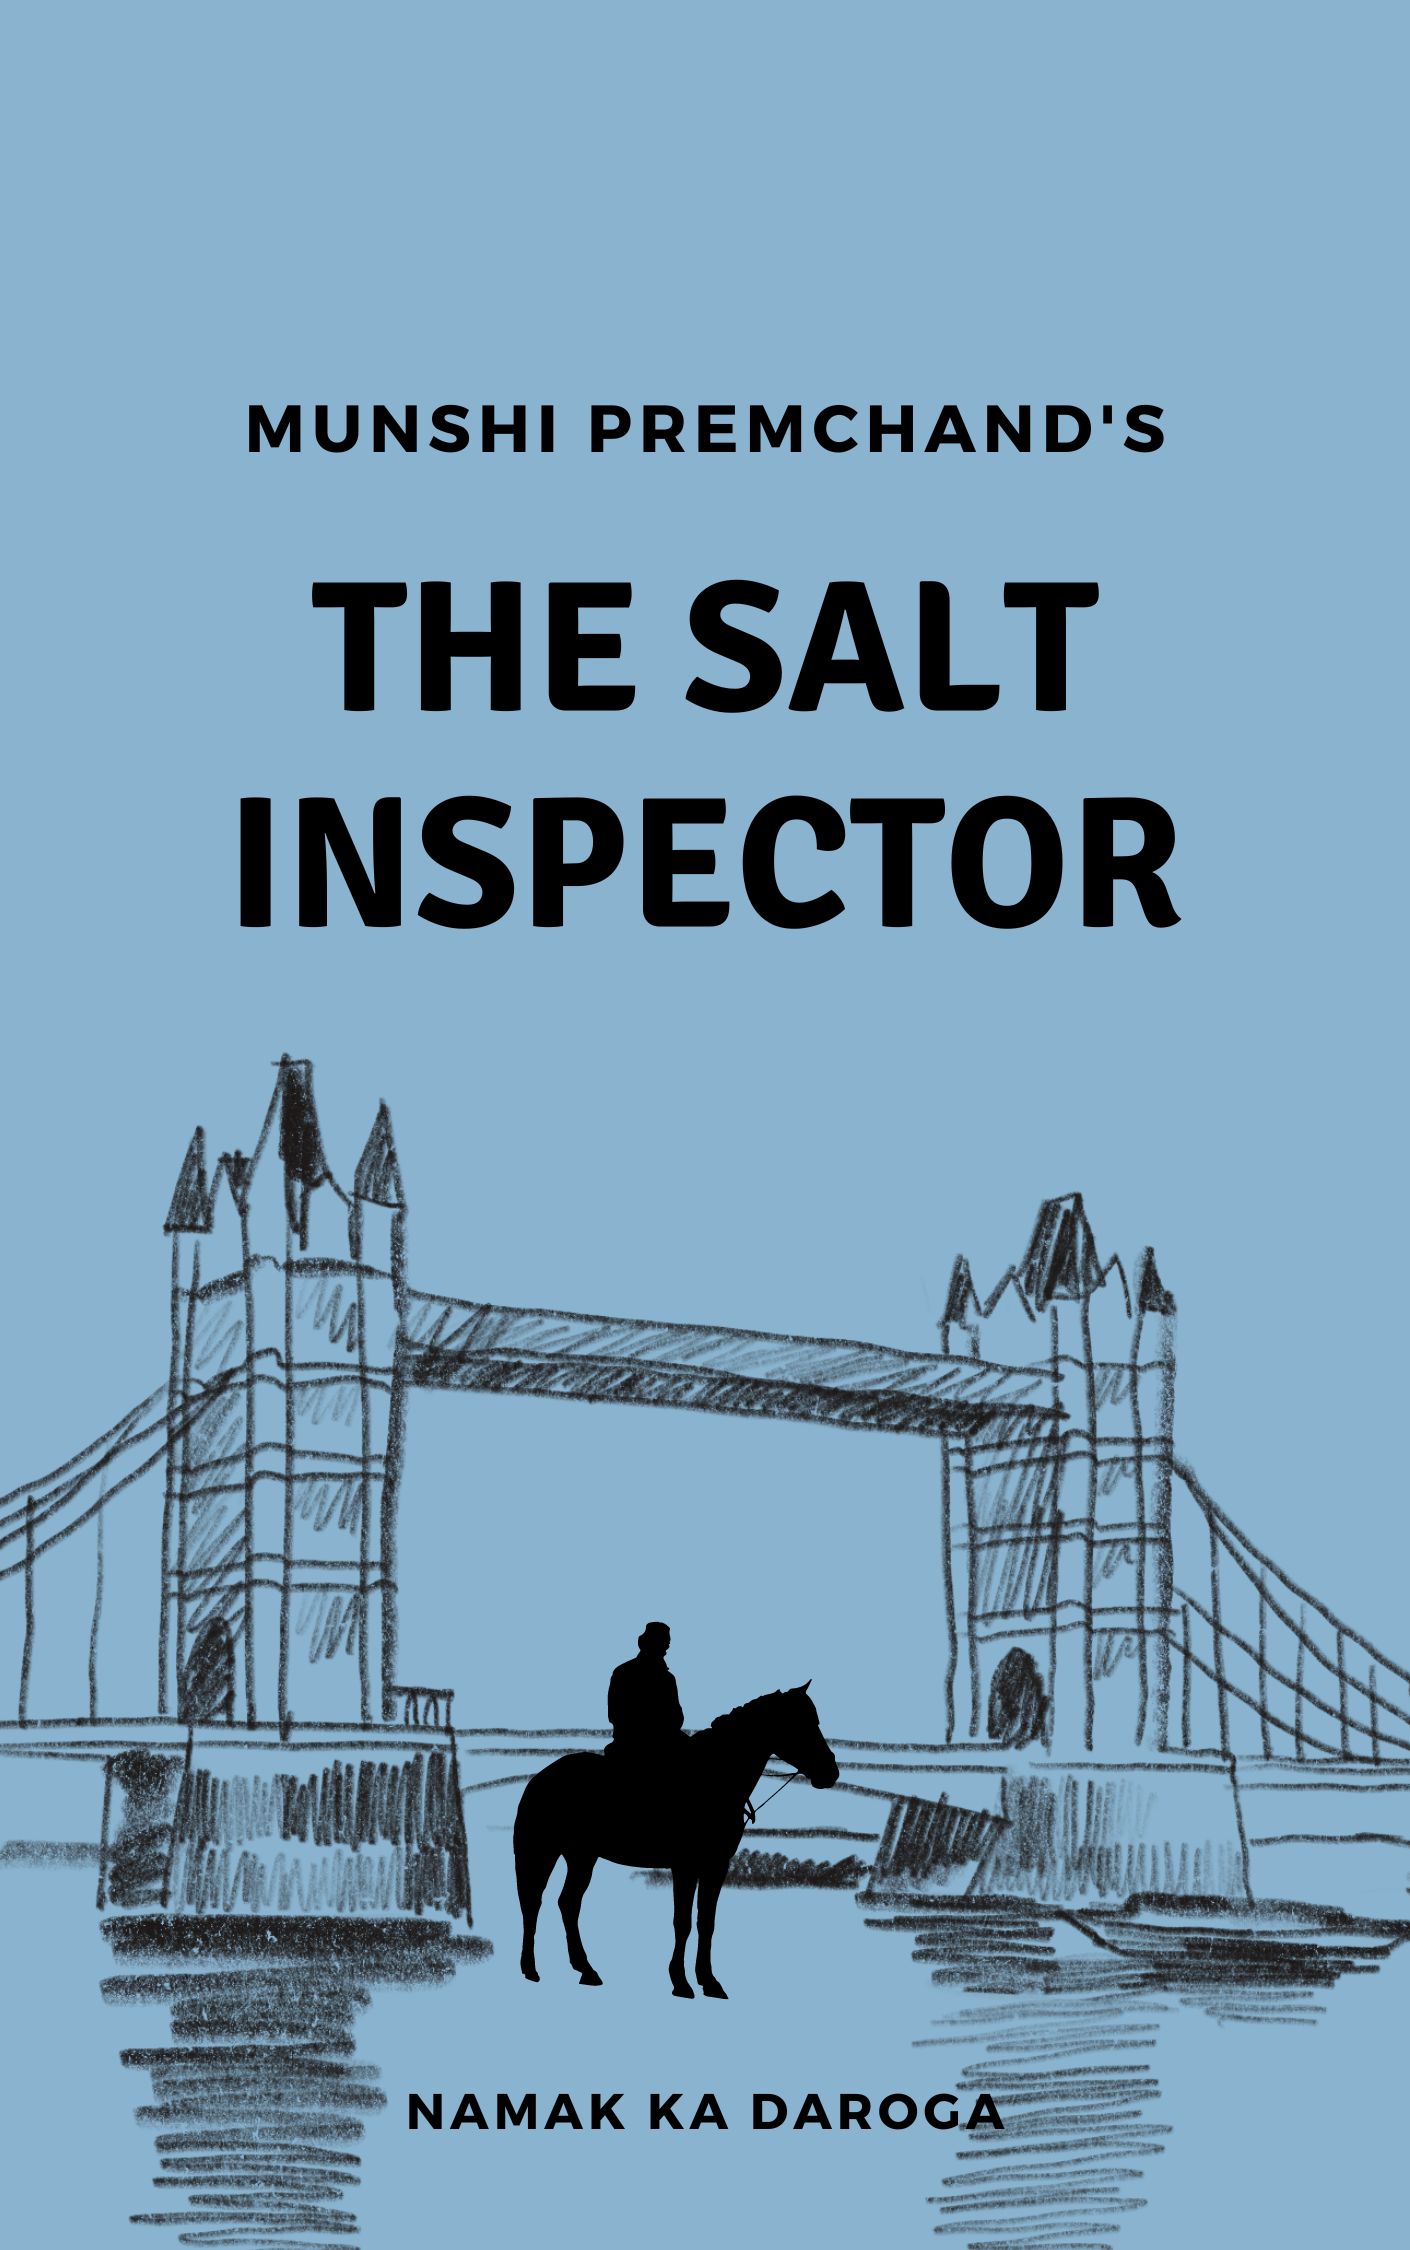 The Salt Inspector by Munshi Premchand